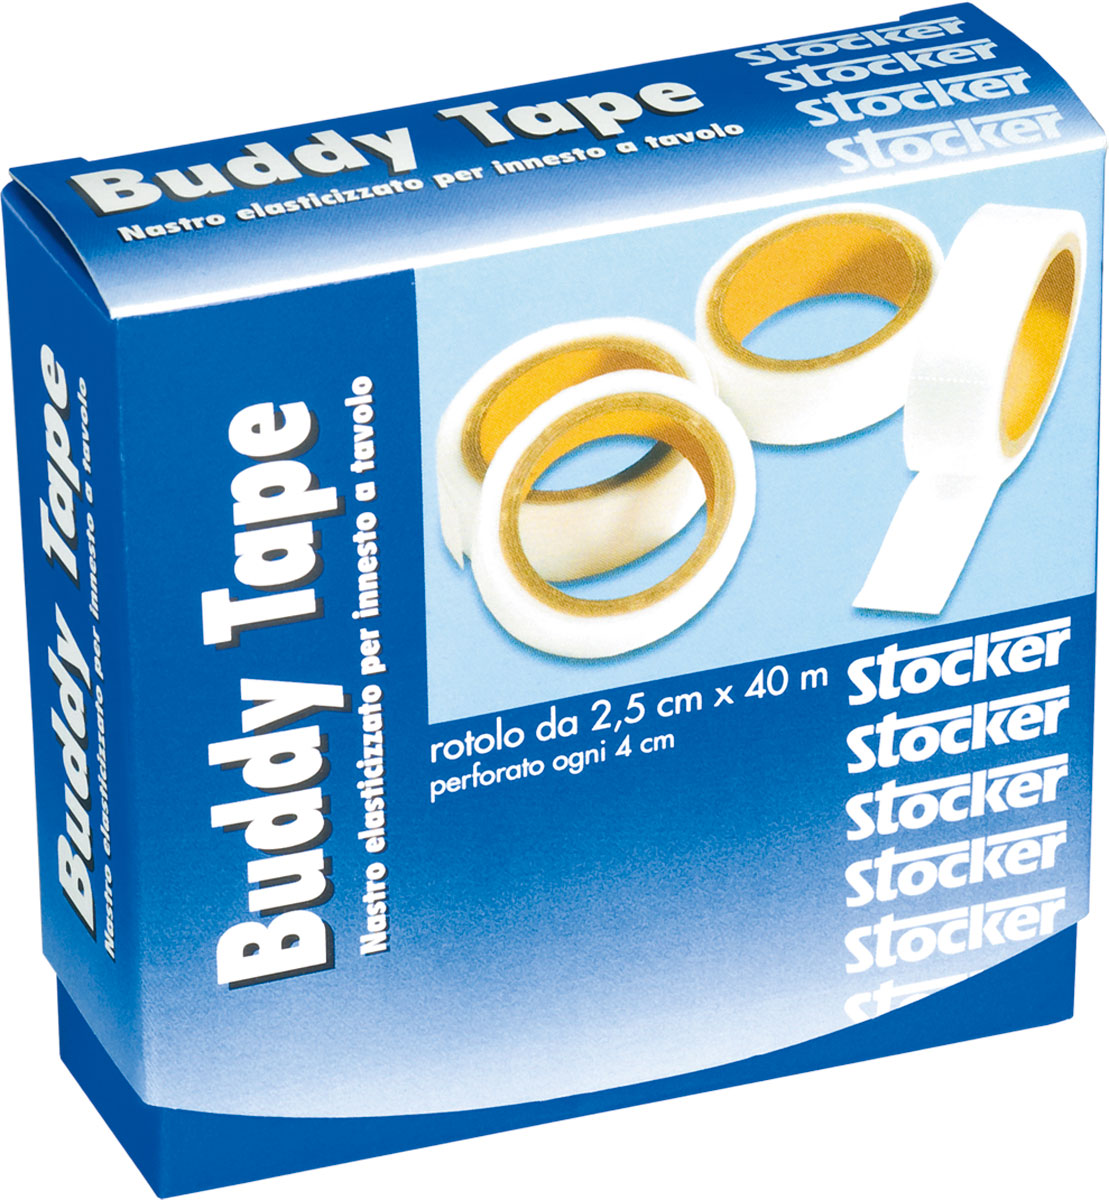 Cinta injerto Buddy Tape (biodegradable)